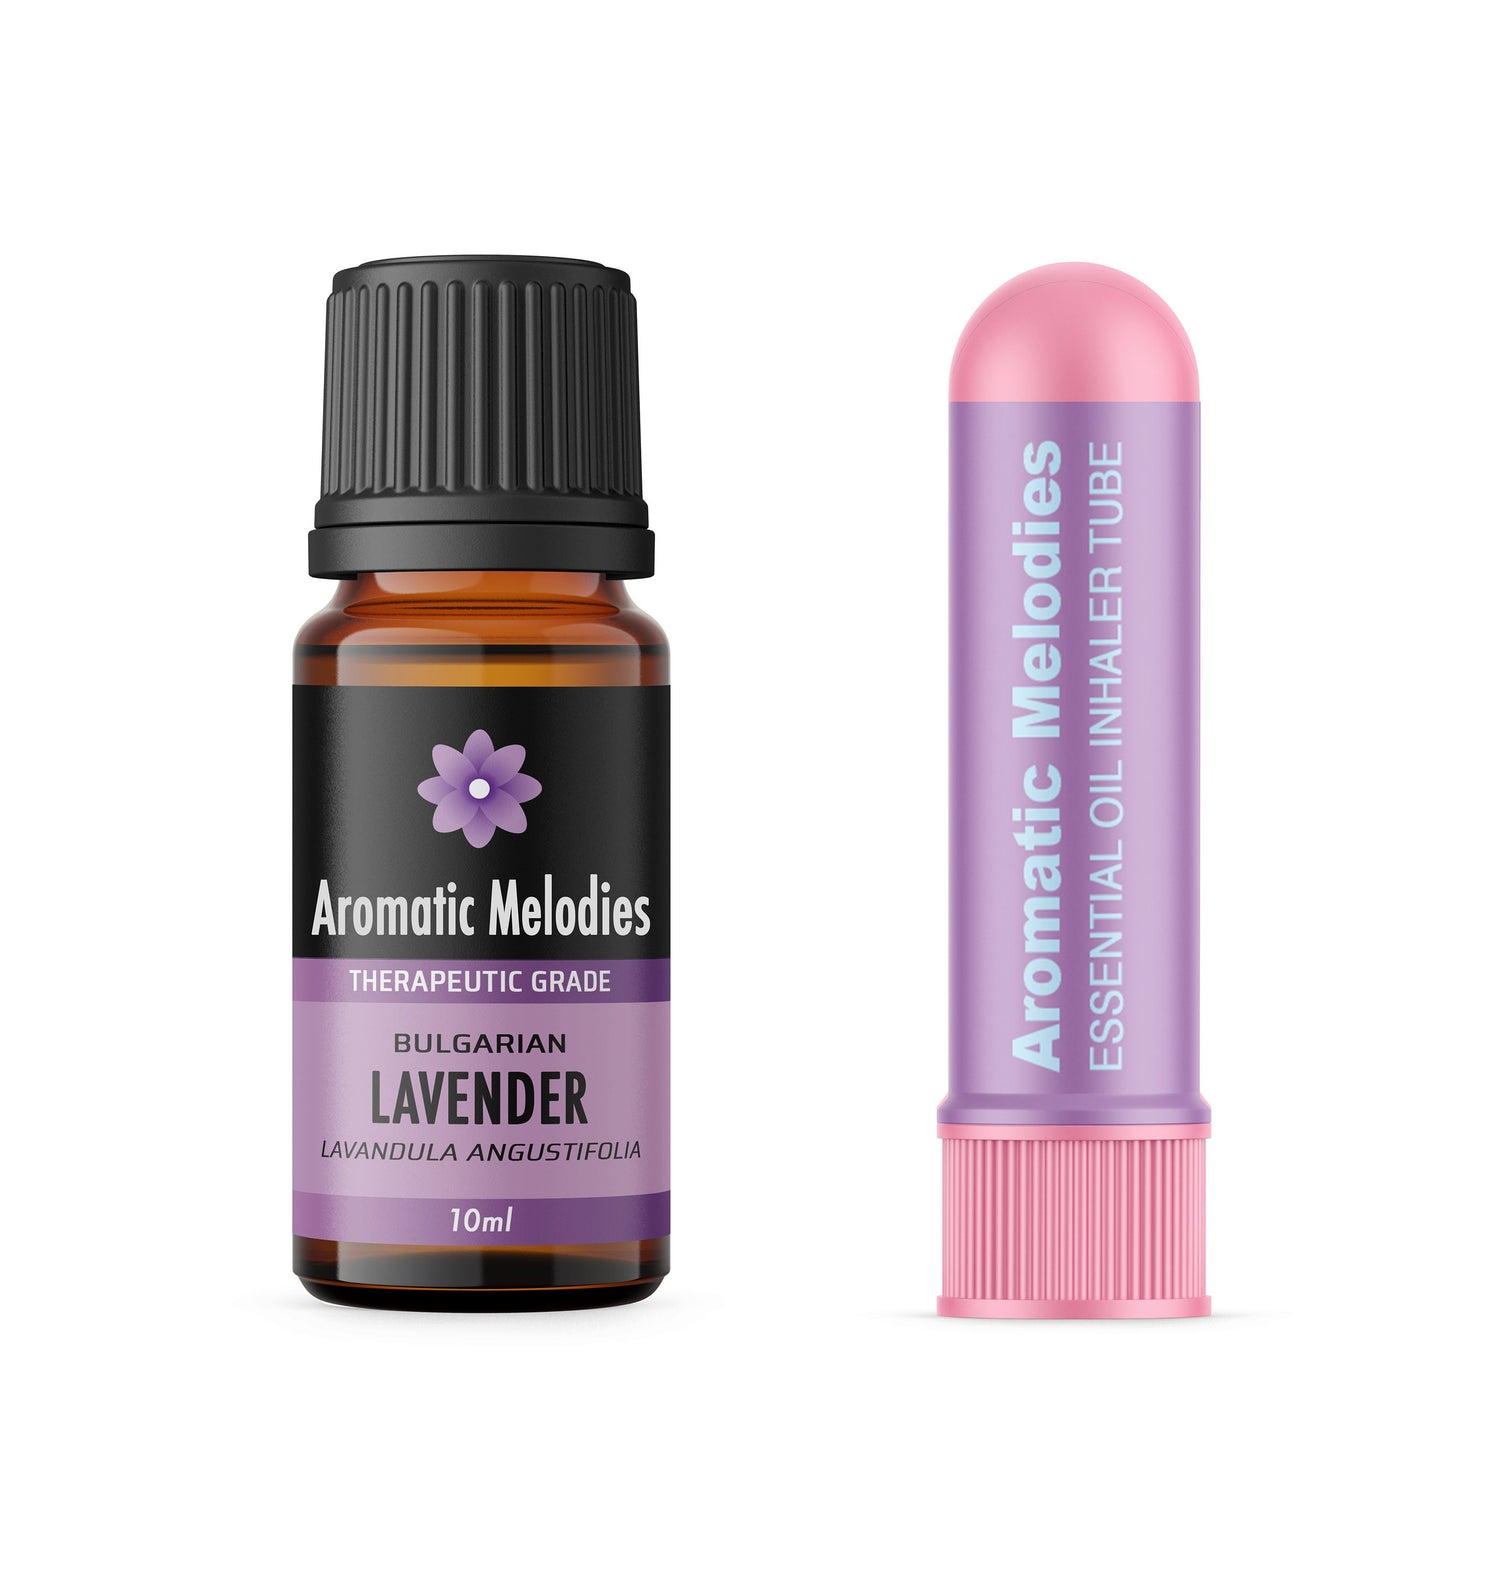 Lavender (Bulgarian) Essential Oil - Premium 100% Natural Therapeutic Grade - Oil Diffuser, Massage, Fragrance, Soap, Candles